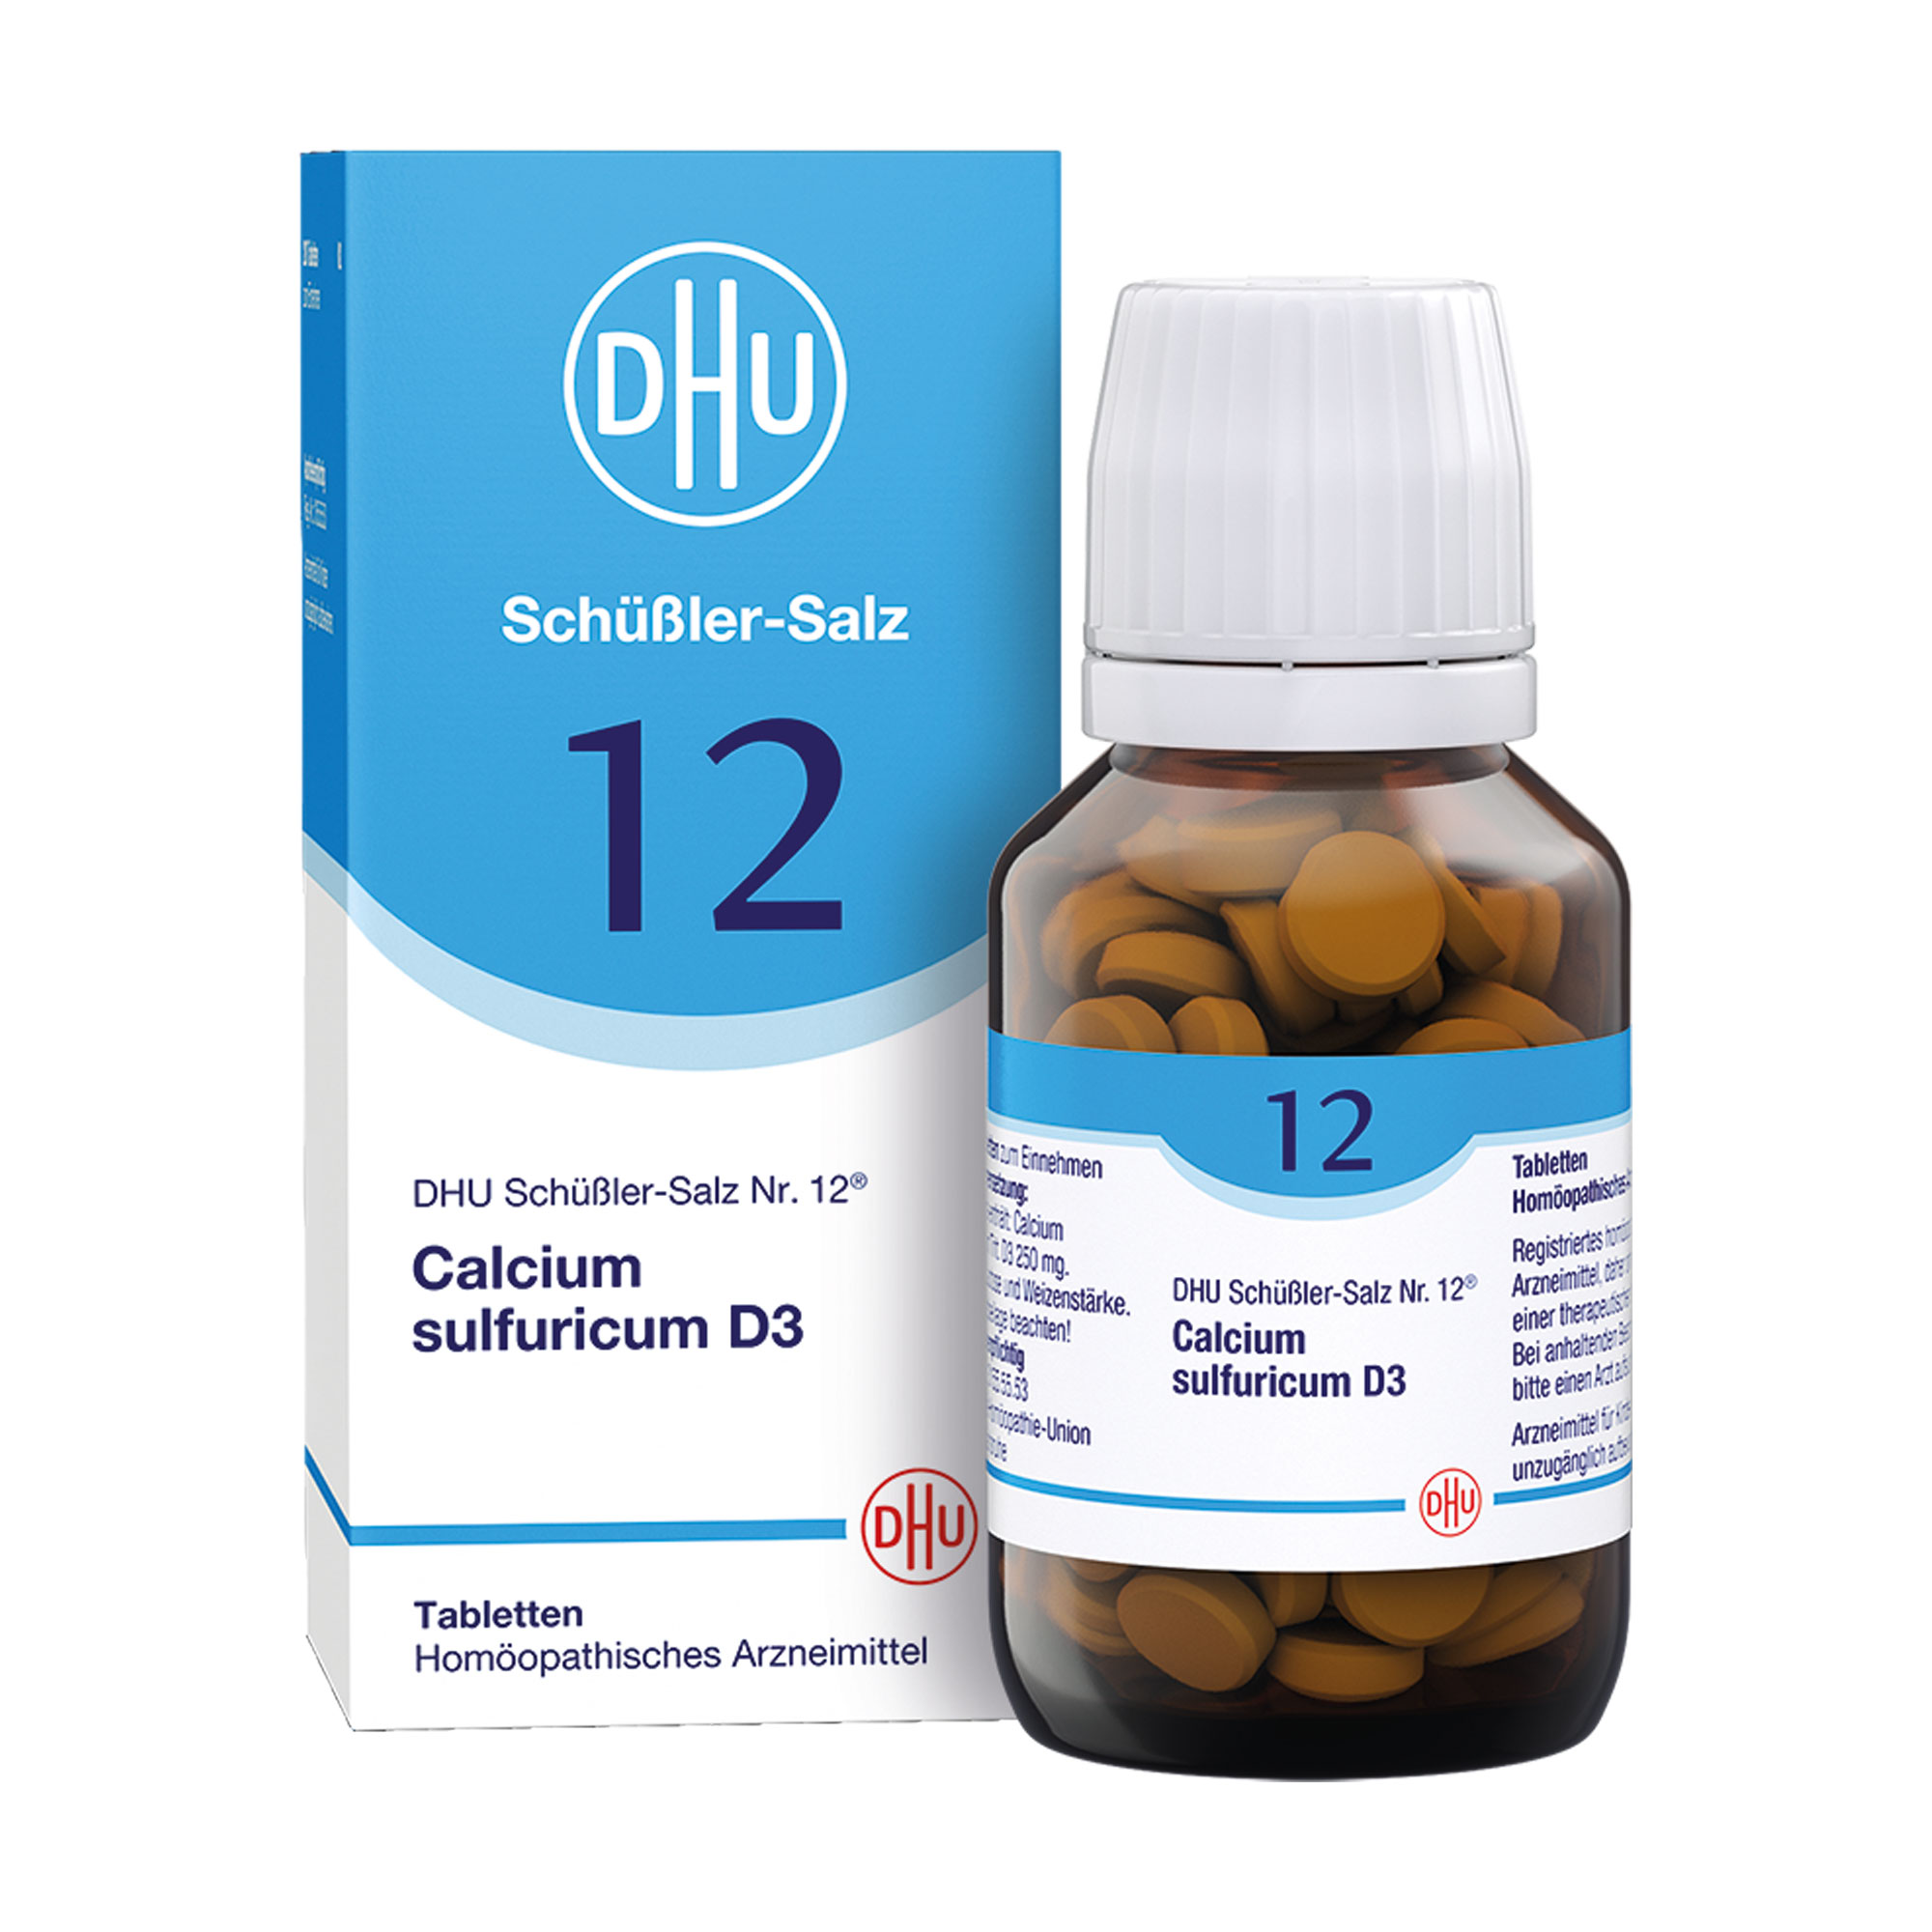 Homöopathisches Arzneimittel mit Calcium sulfuricum Trit. D3.